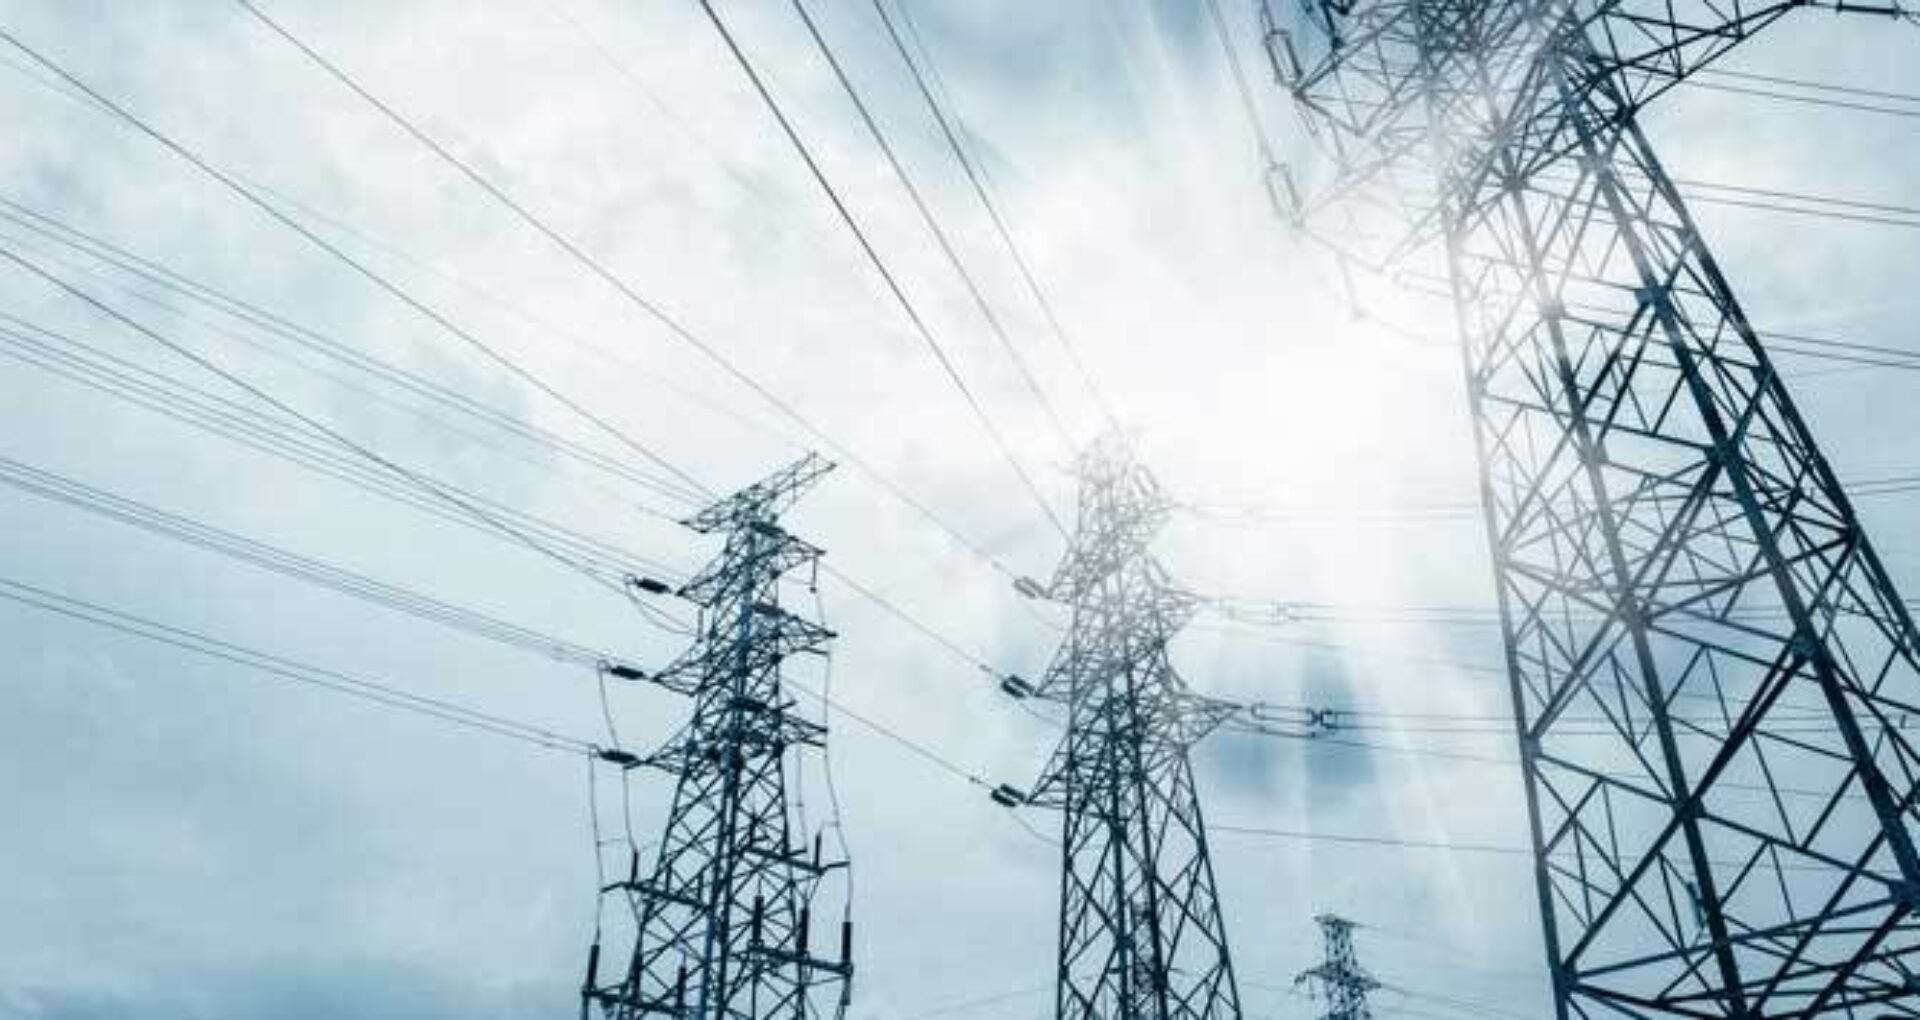 Moldova Set to Build Power Link with Romania